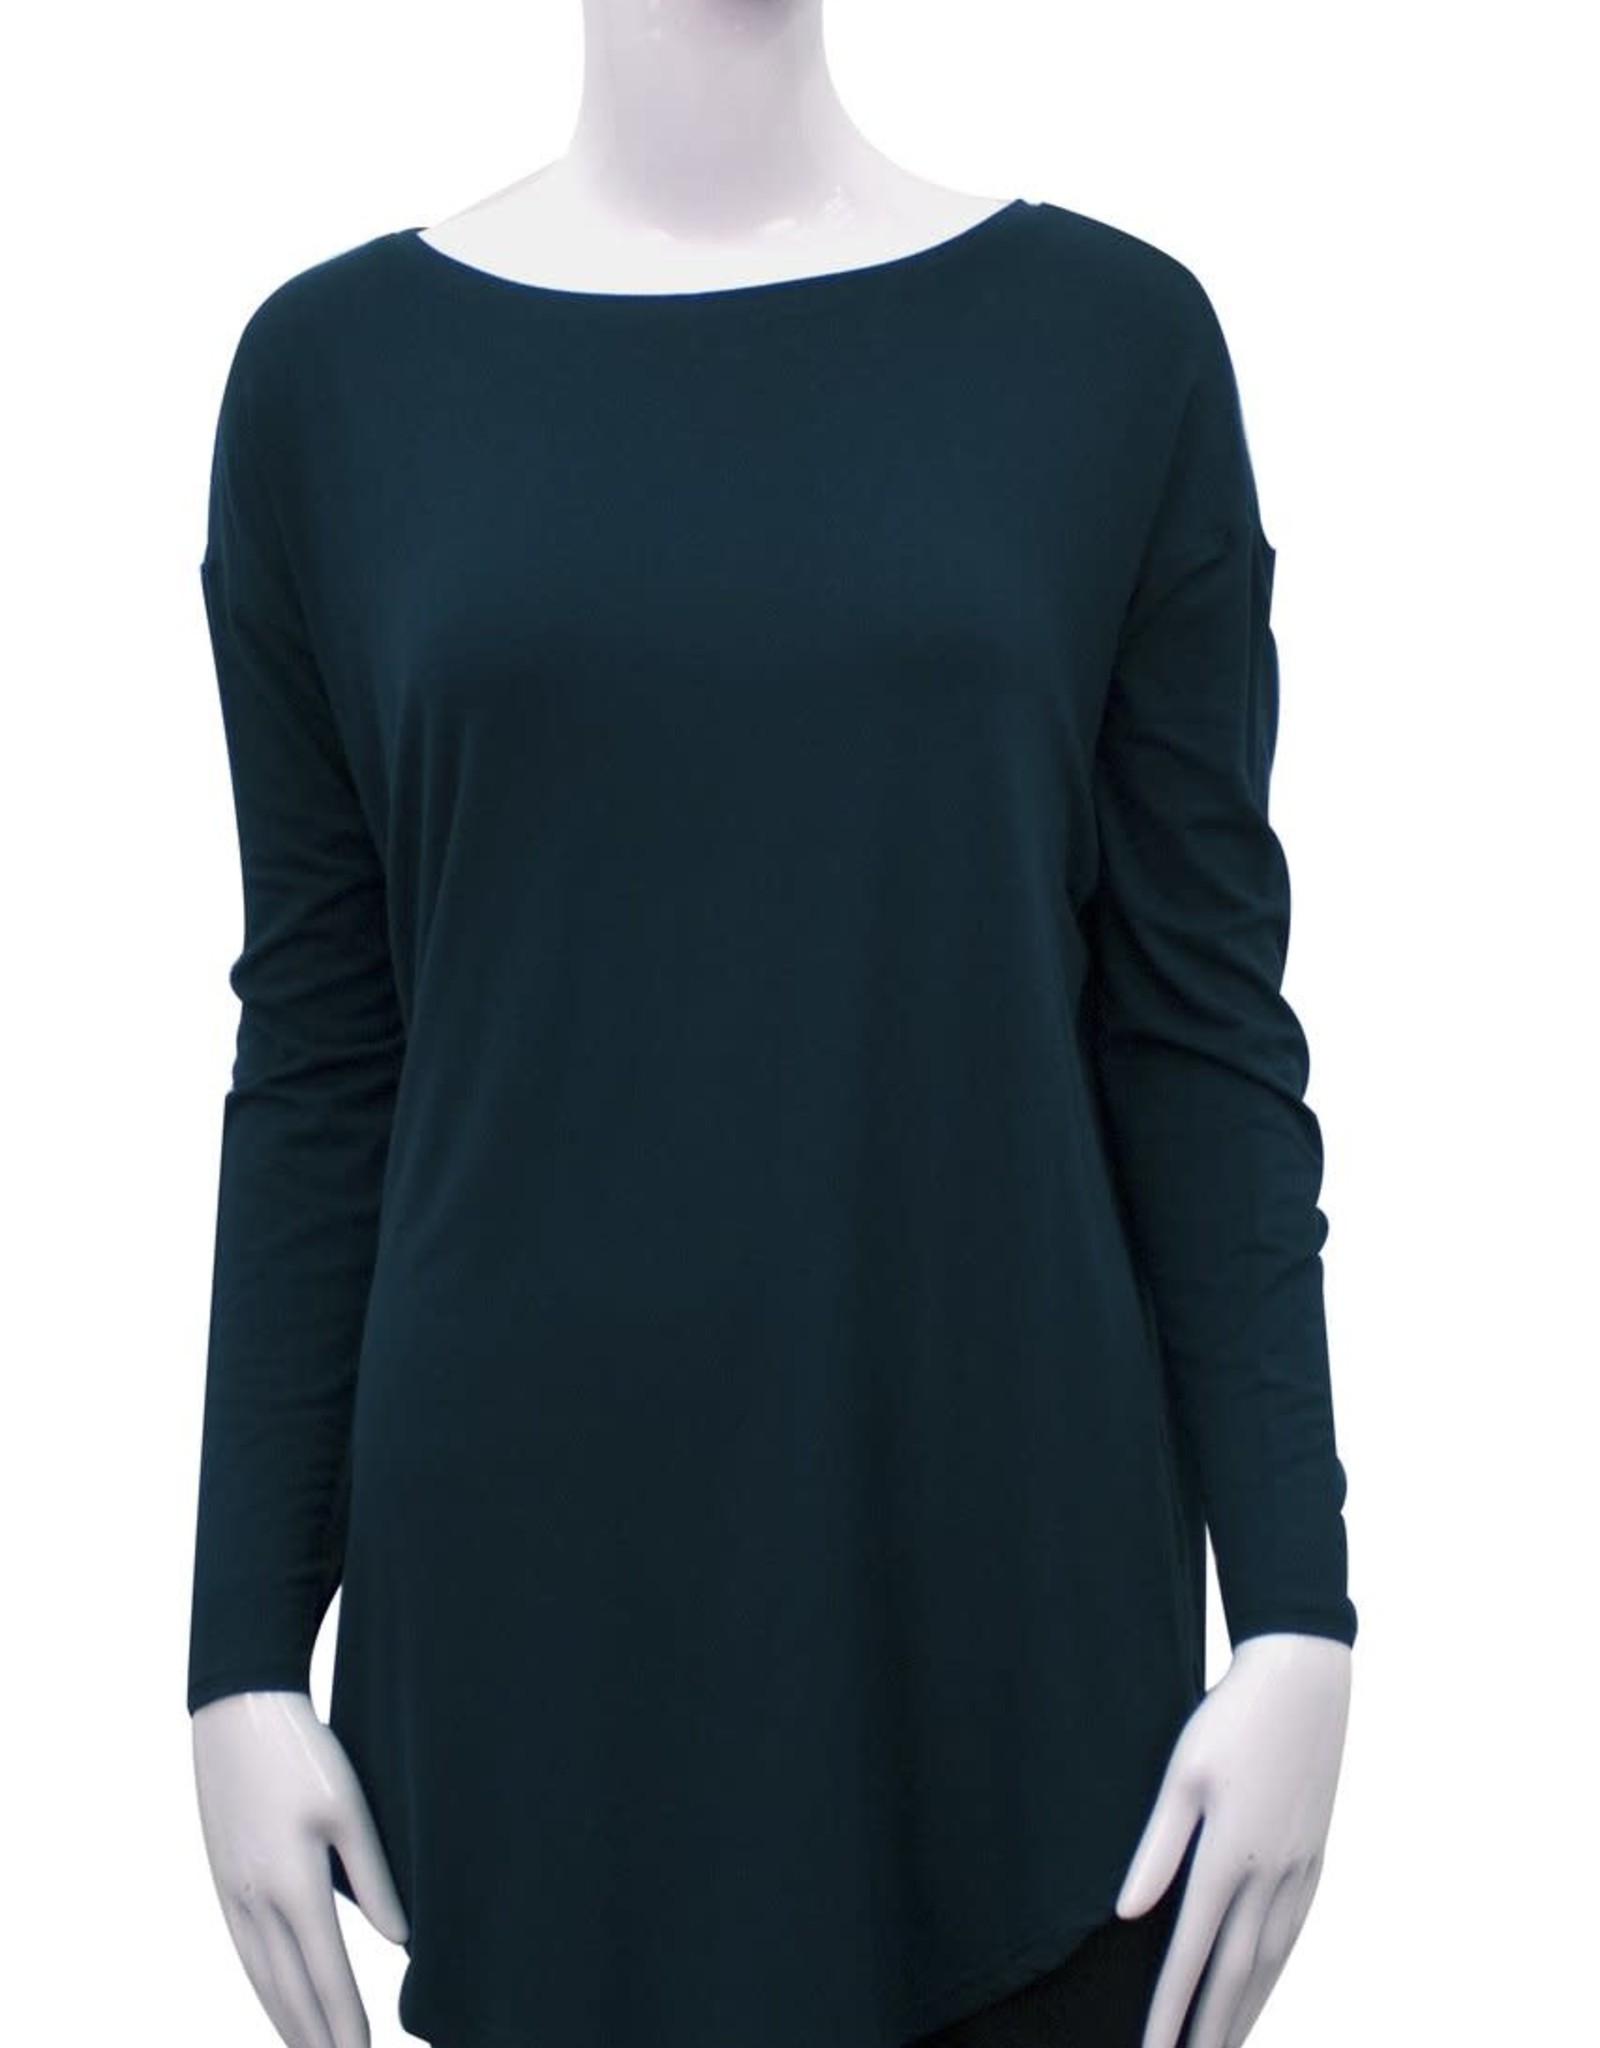 Chloe Angus Design Long Sleeve Shirttail